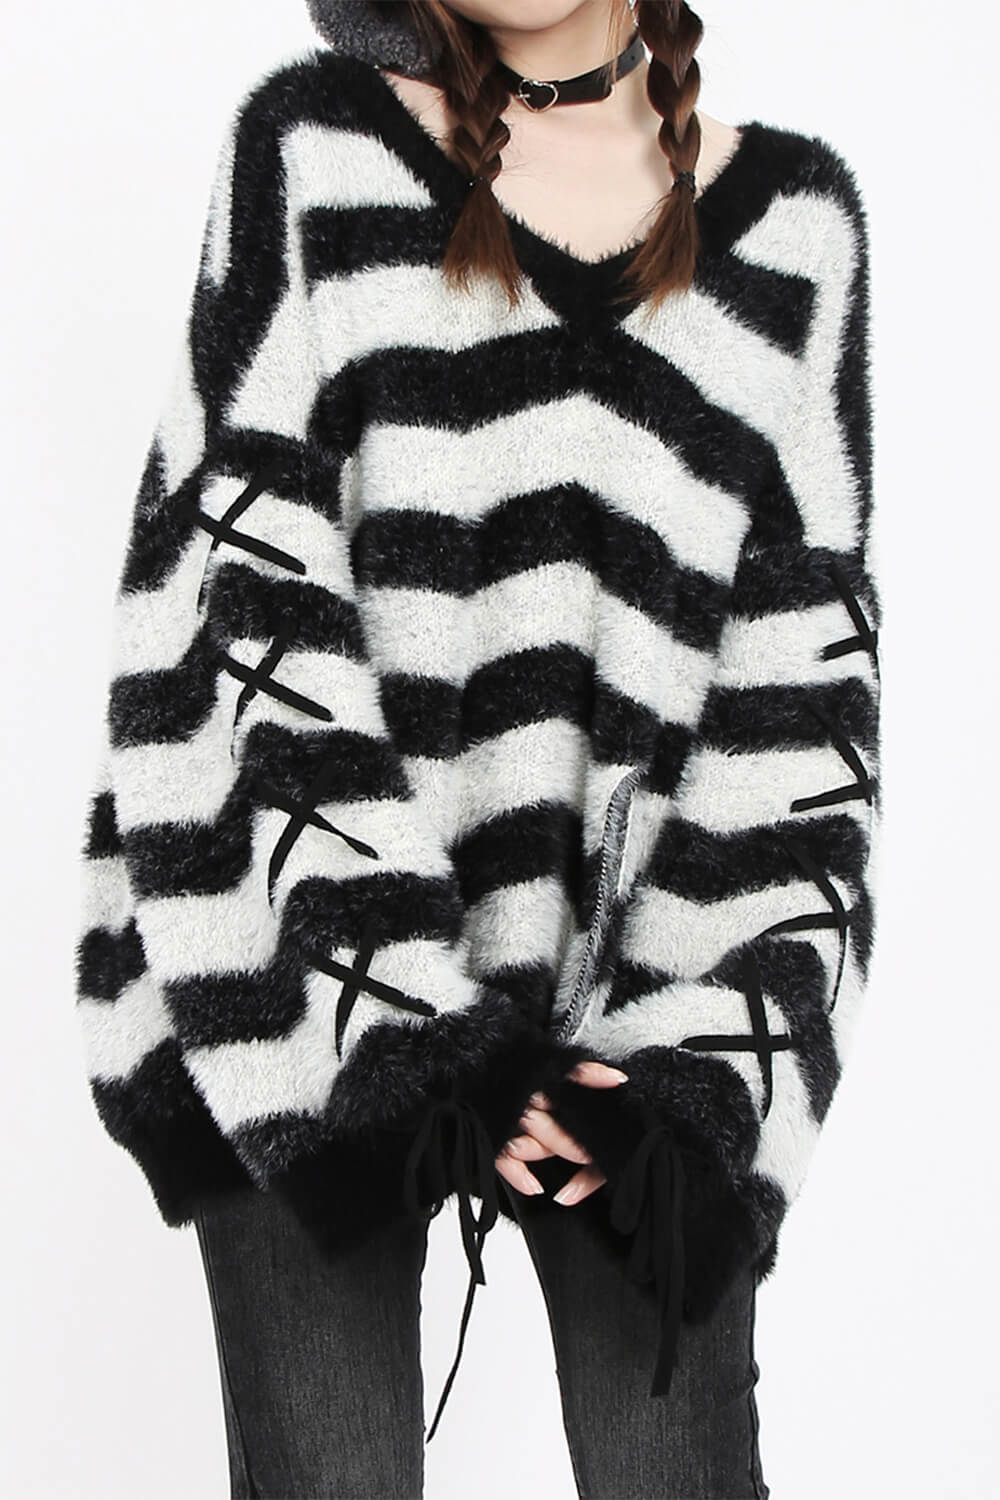 EGirl Black and White Striped Lazy Sweater